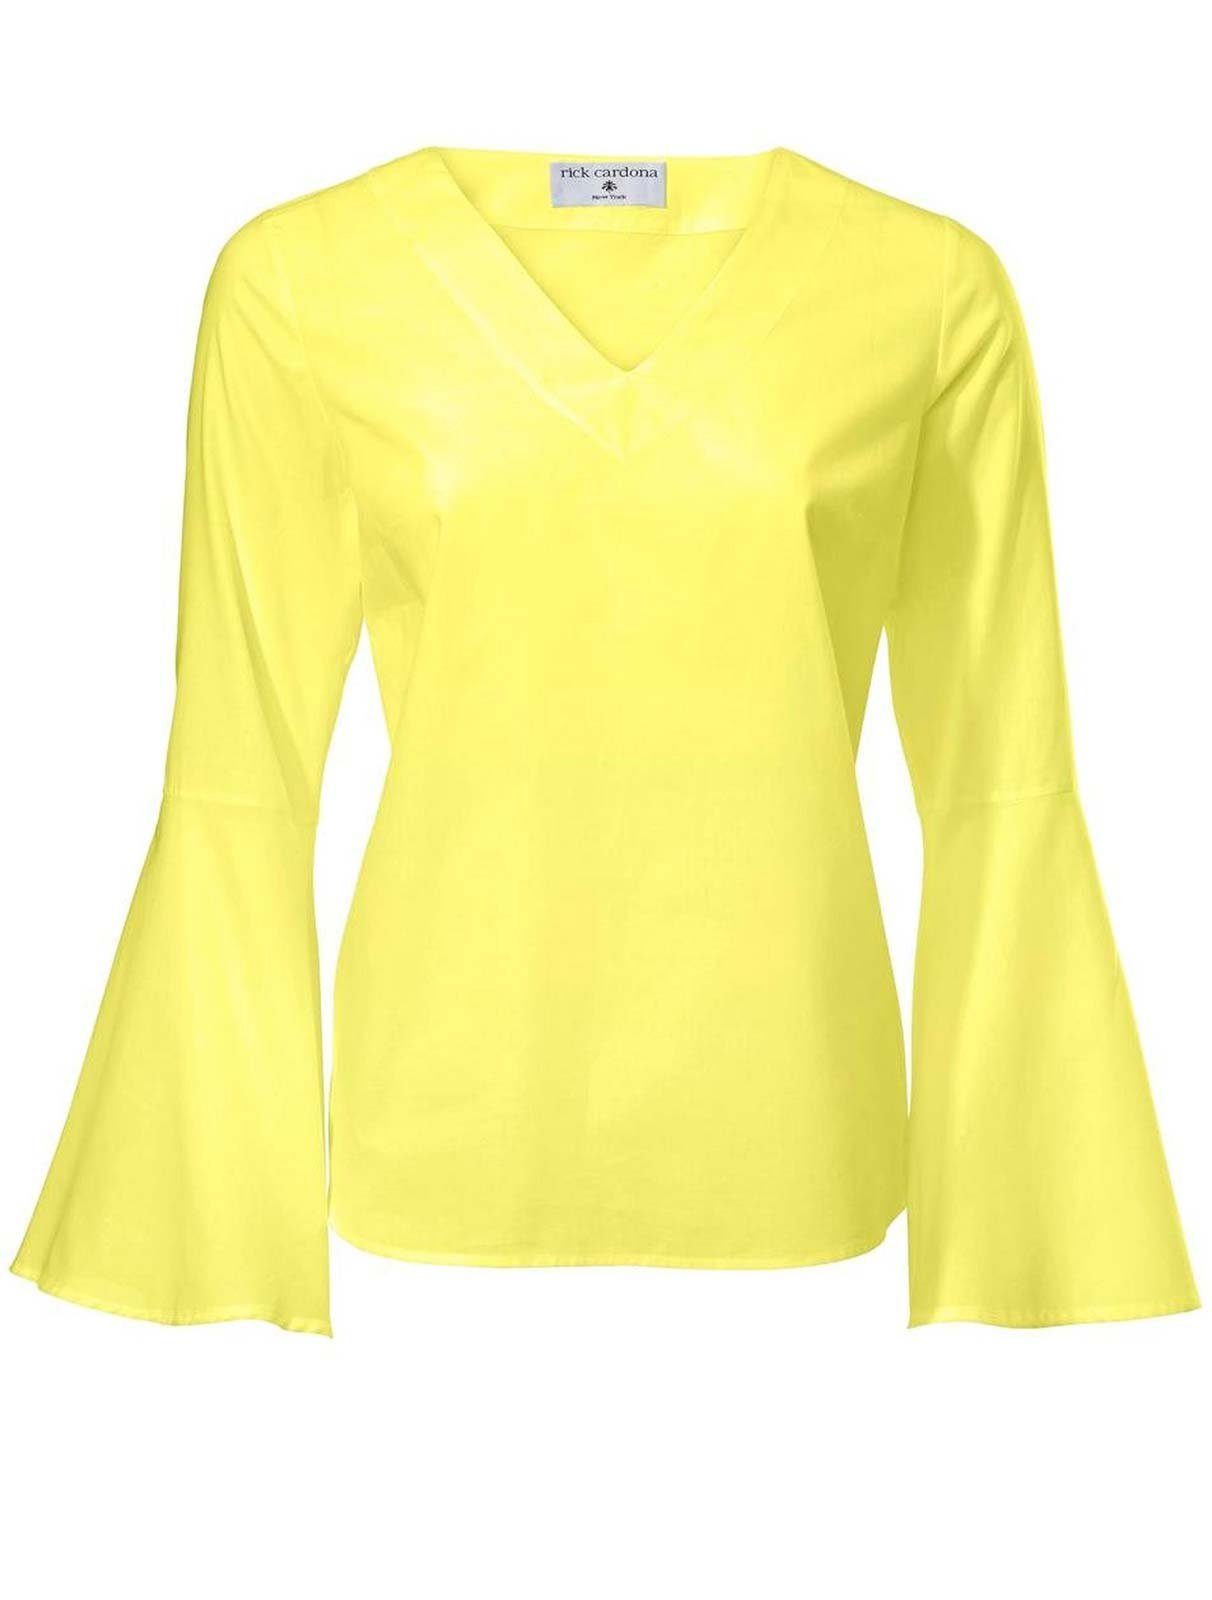 Rick by rick cardona Shirtbluse »RICK CARDONA Damen Designer-Bluse, gelb«  online kaufen | OTTO